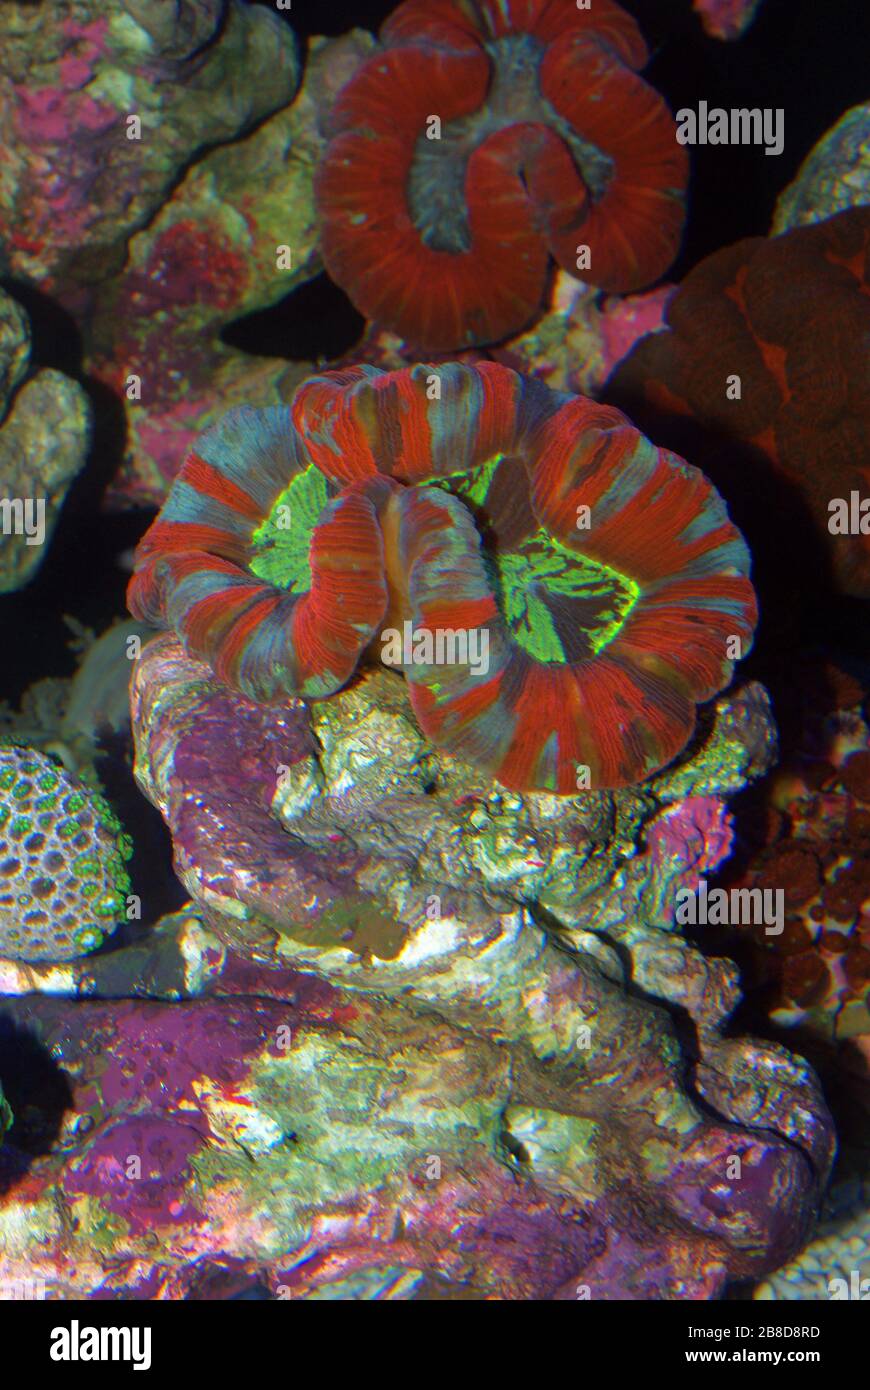 Lobed brain coral, Lobophyllia hemprichii Stock Photo